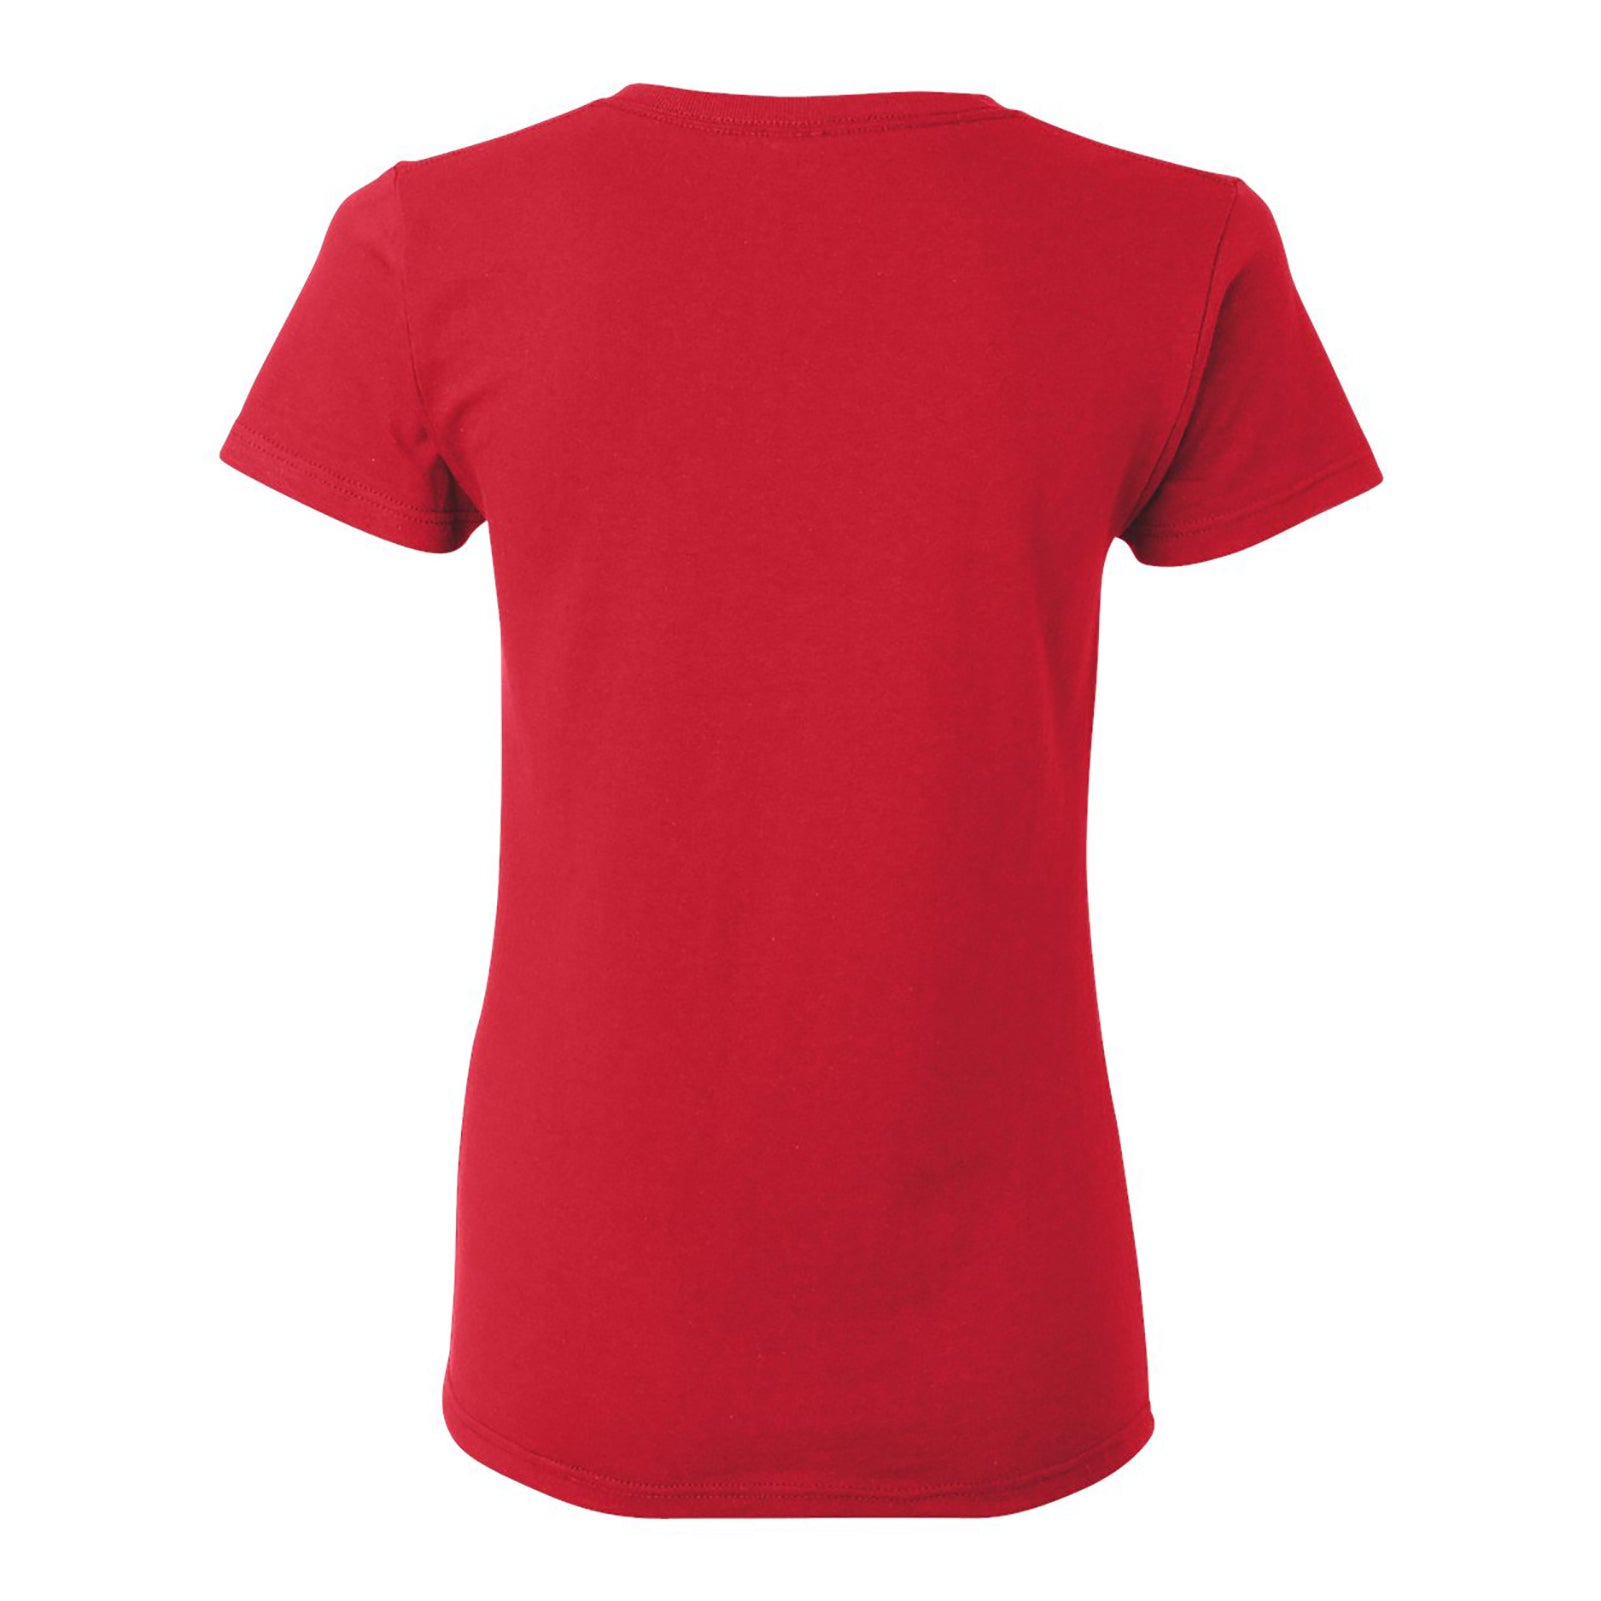 red shirt women